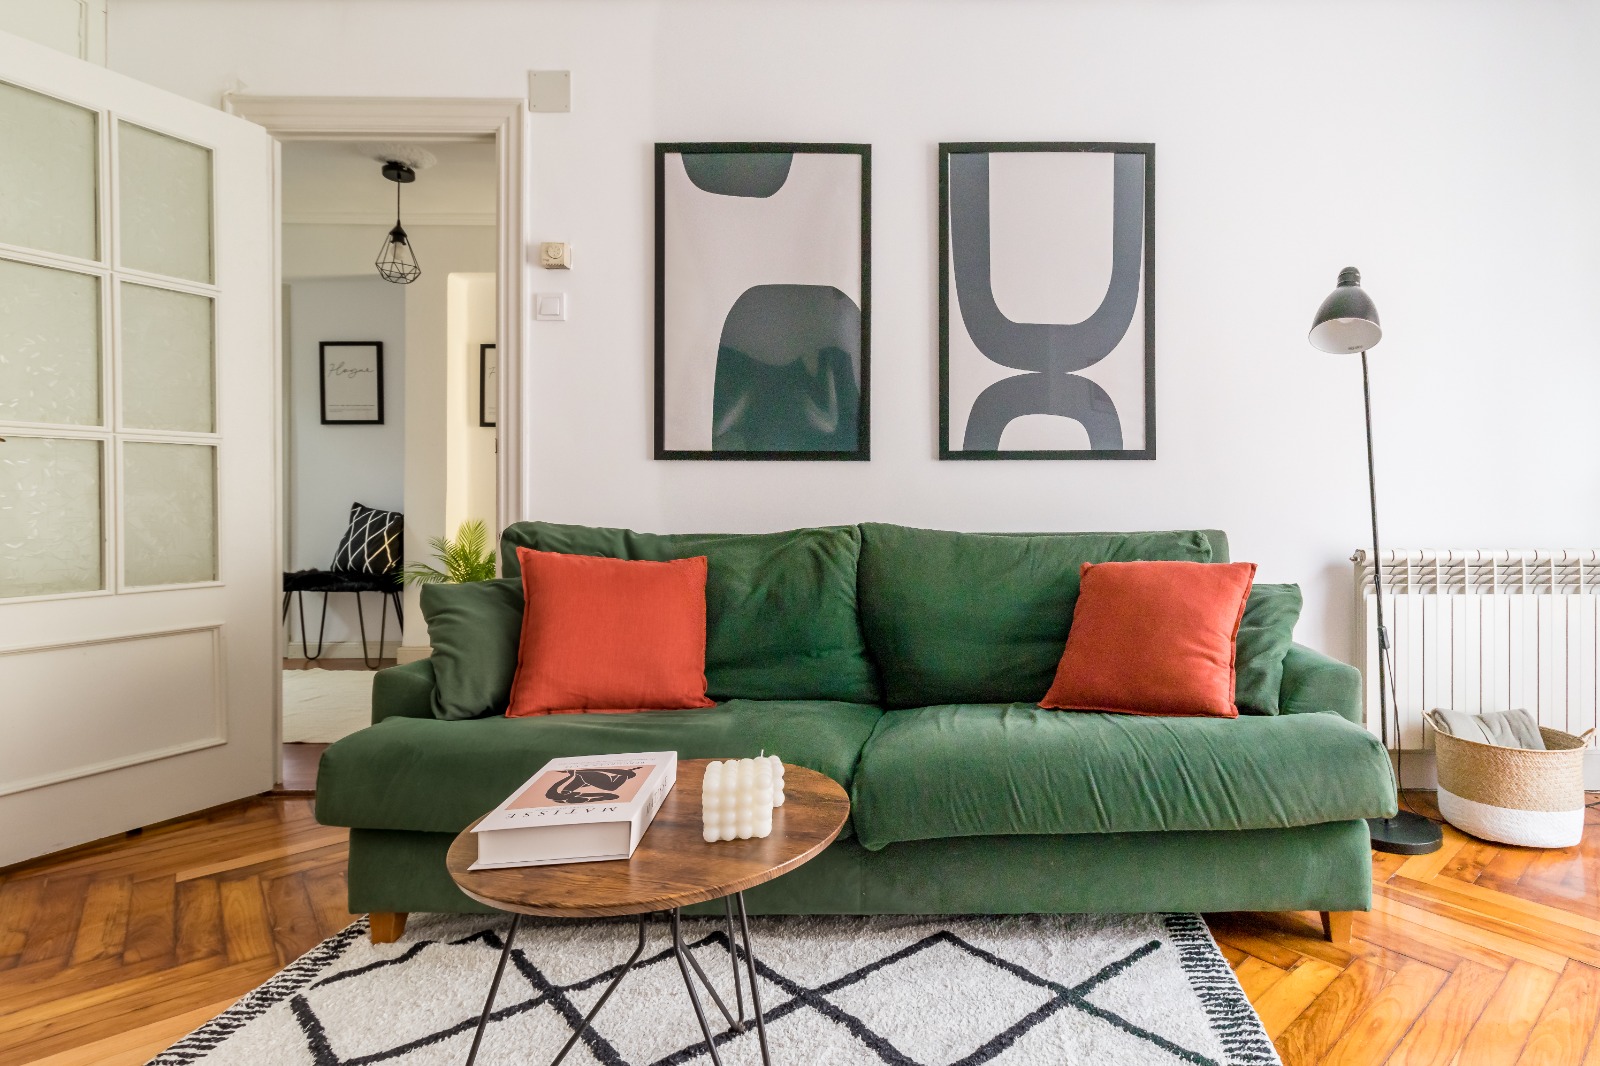 apartment for rent in Santander - livingroom